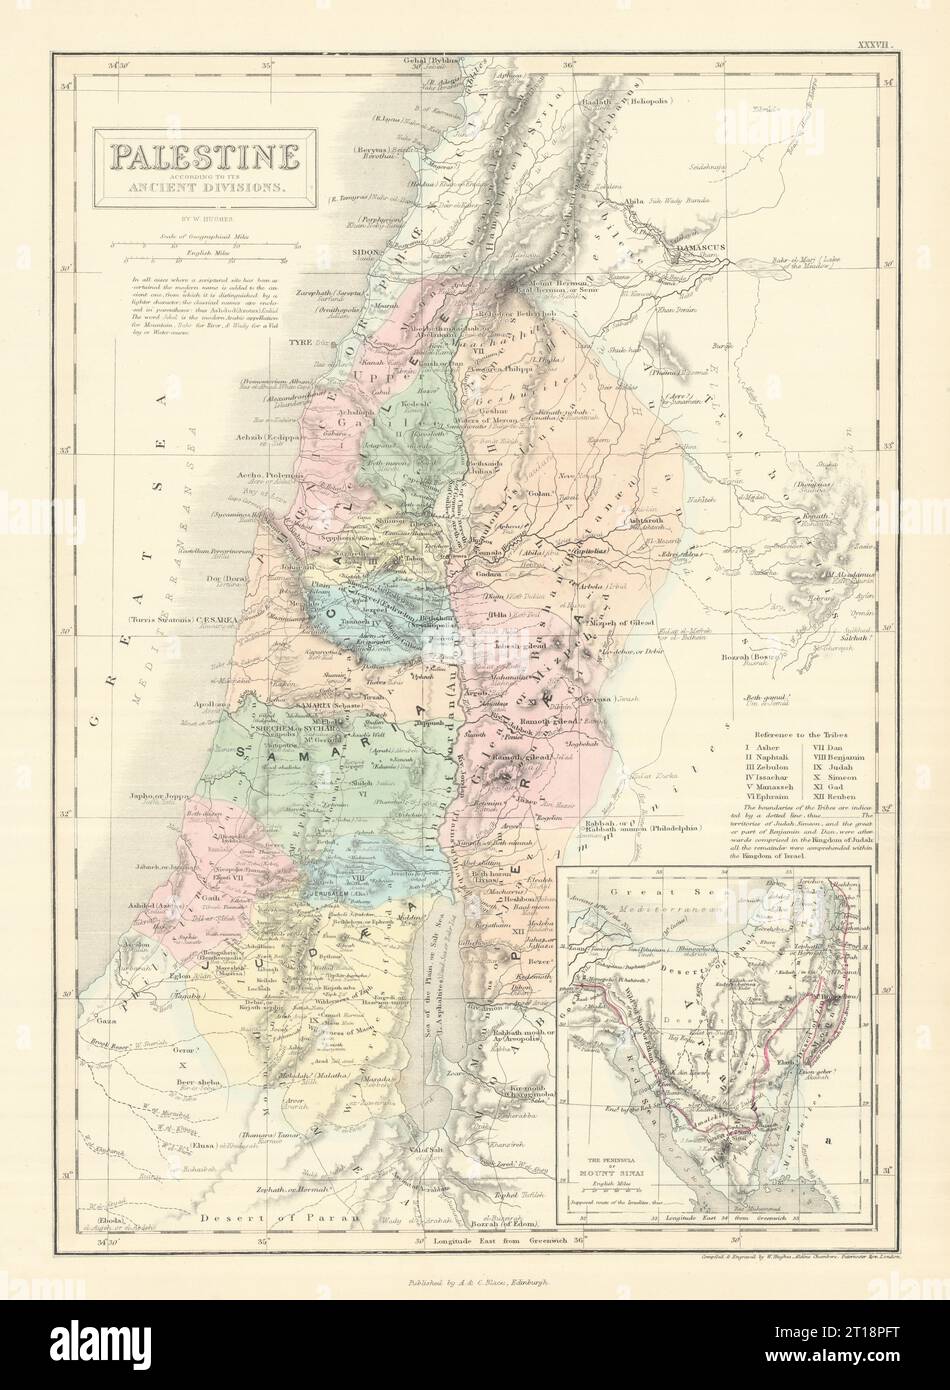 Palästina mit seinen alten Divisionen. Inset Sinai Halbinsel. HUGHES 1854 Karte Stockfoto